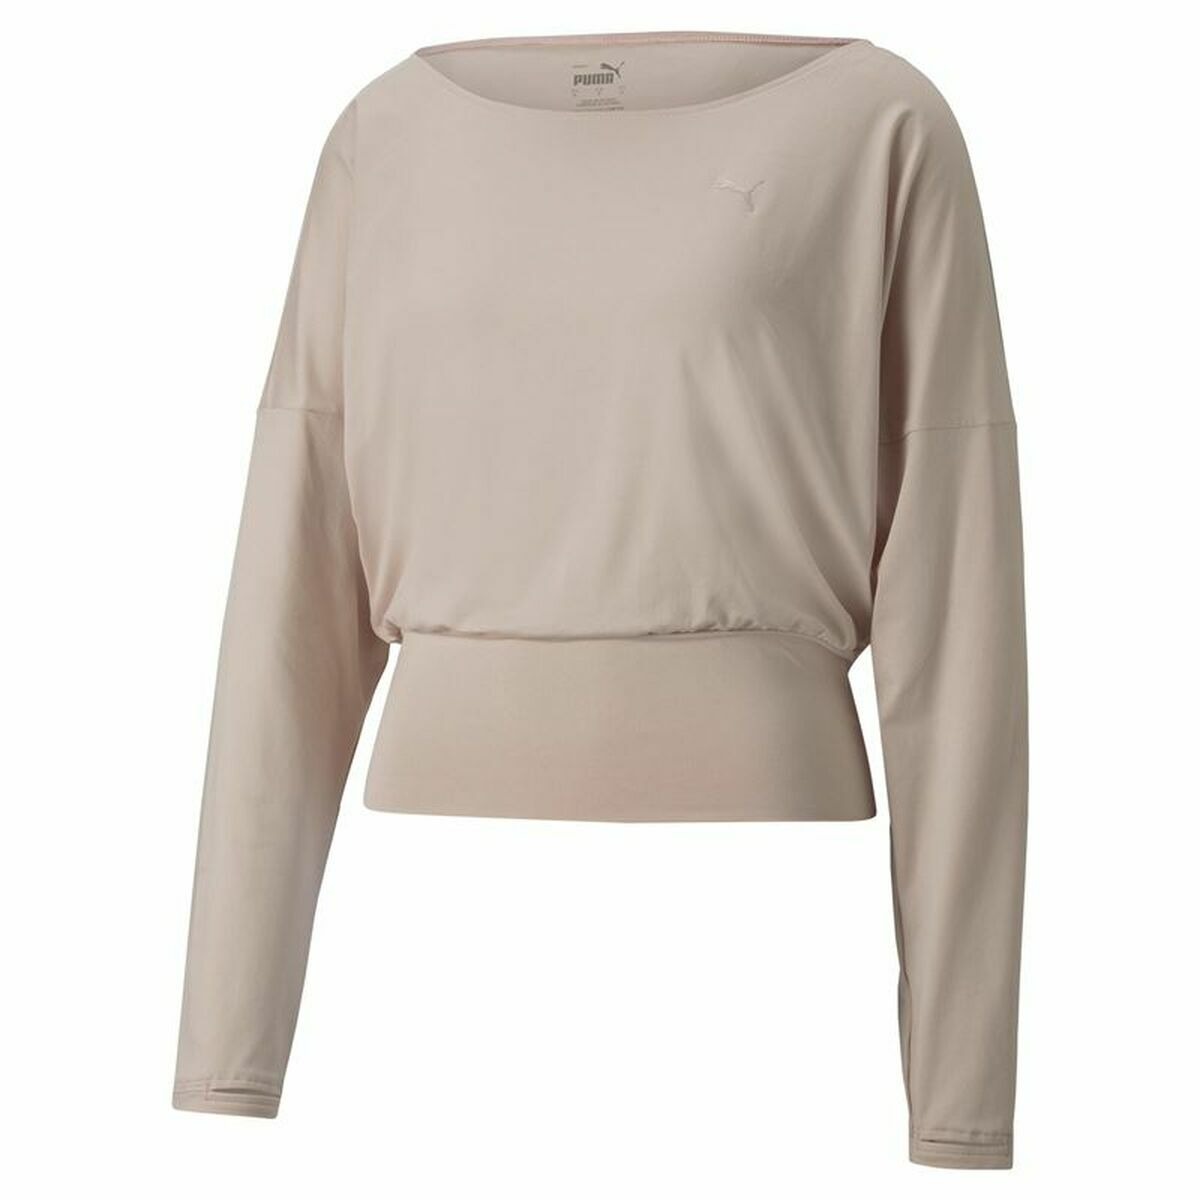 Kaufe Damen Sweater ohne Kapuze Puma Studio Yogini Lite Lachsfarben bei AWK Flagship um € 54.00